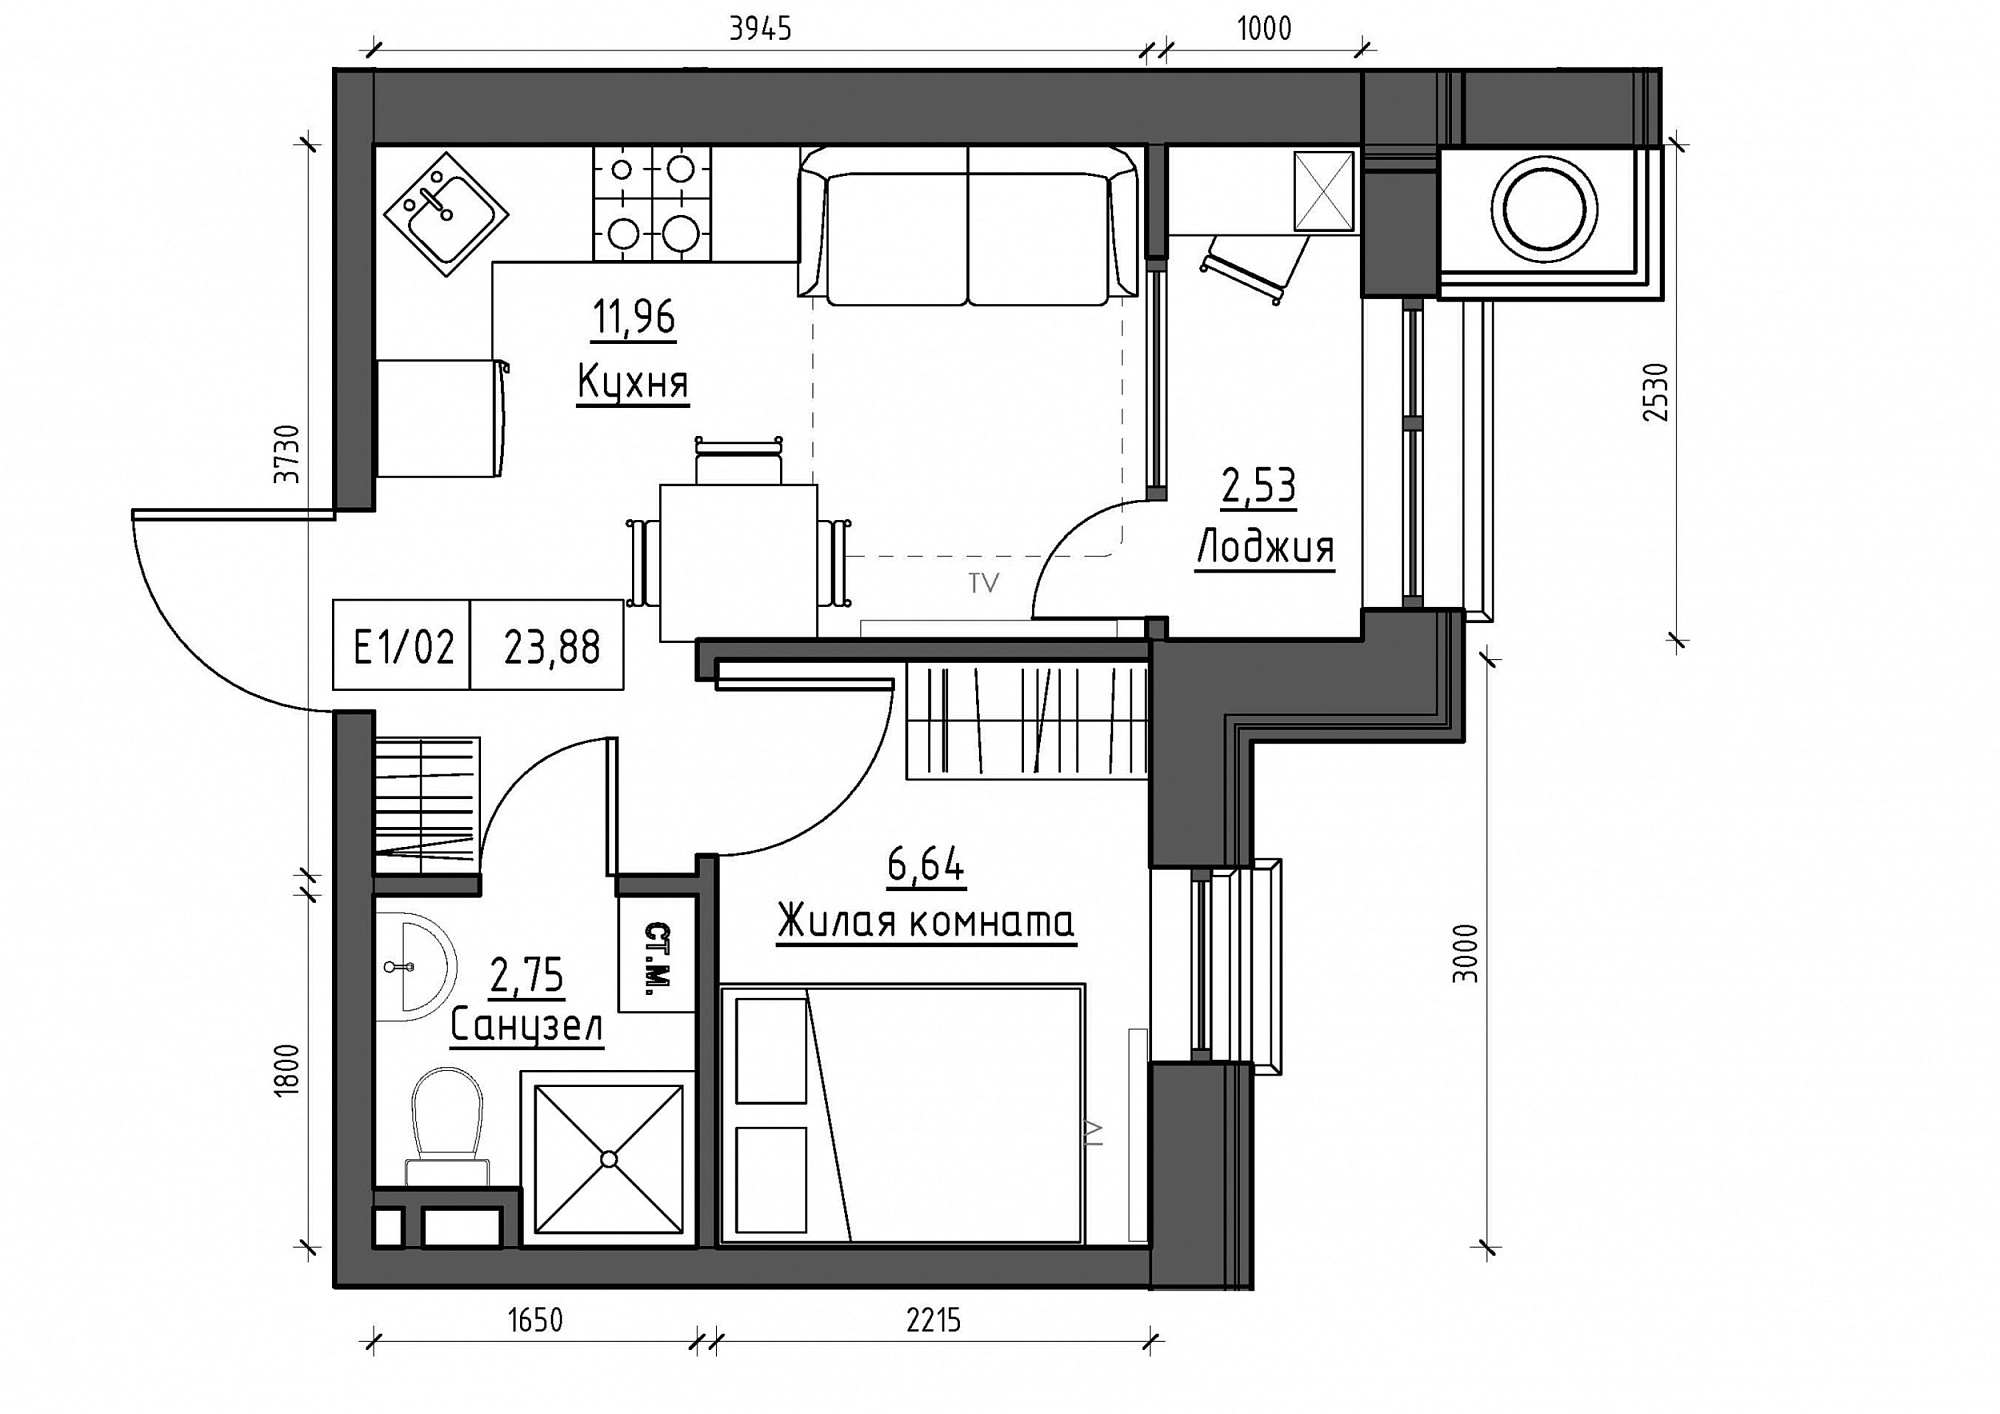 Planning 1-rm flats area 23.88m2, KS-012-03/0015.